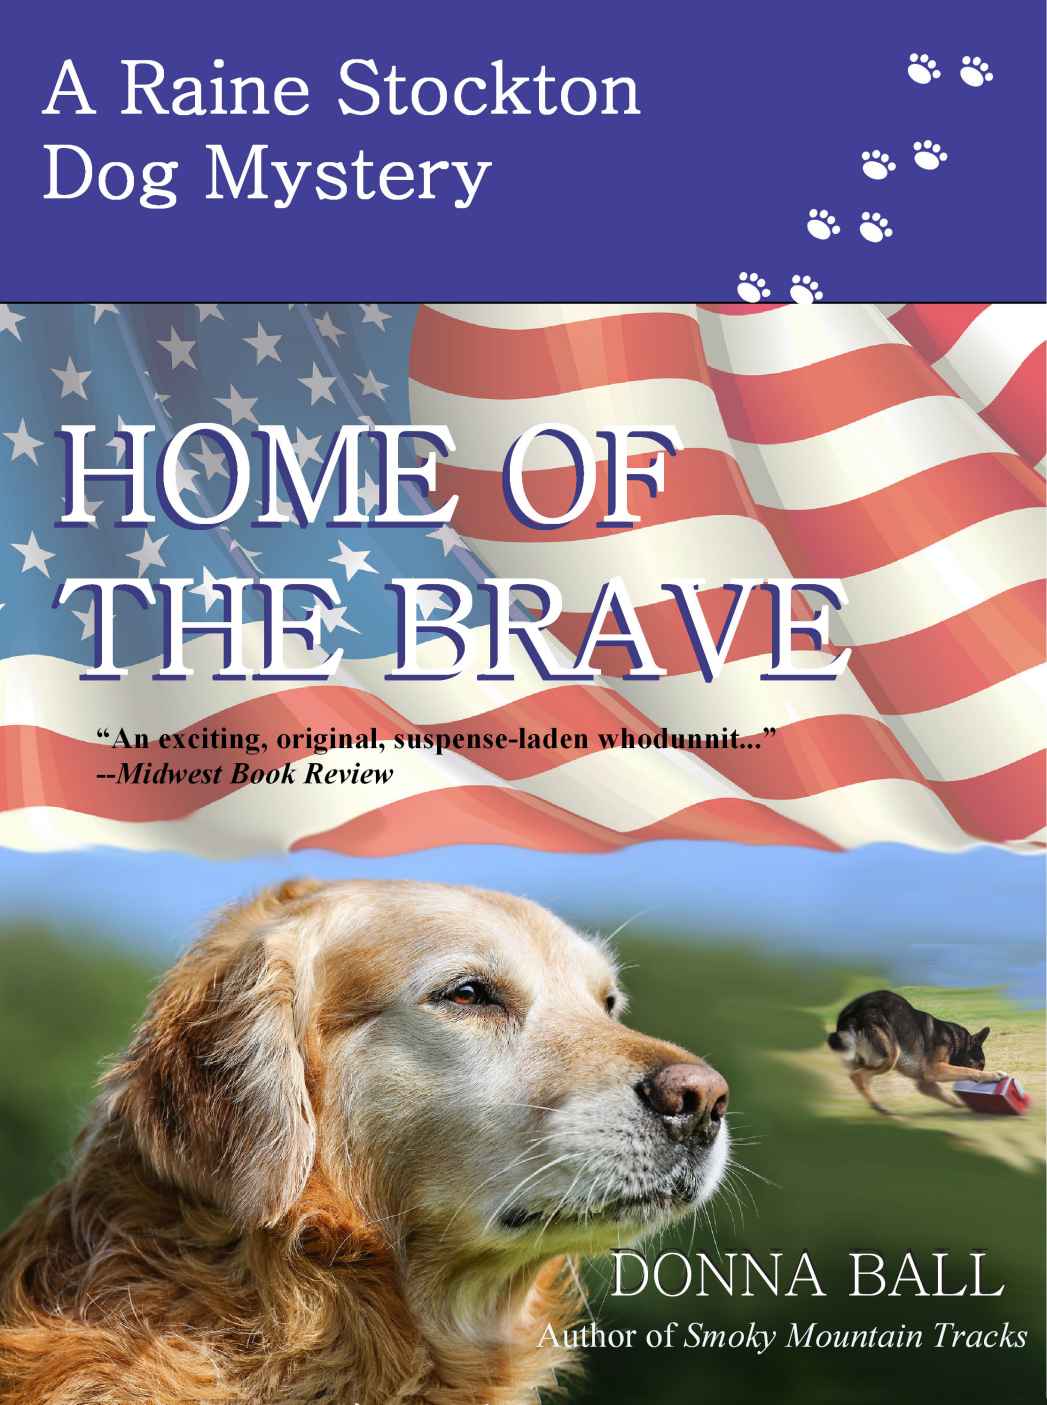 Home of the Brave (Raine Stockton Dog Mysteries Book 9)